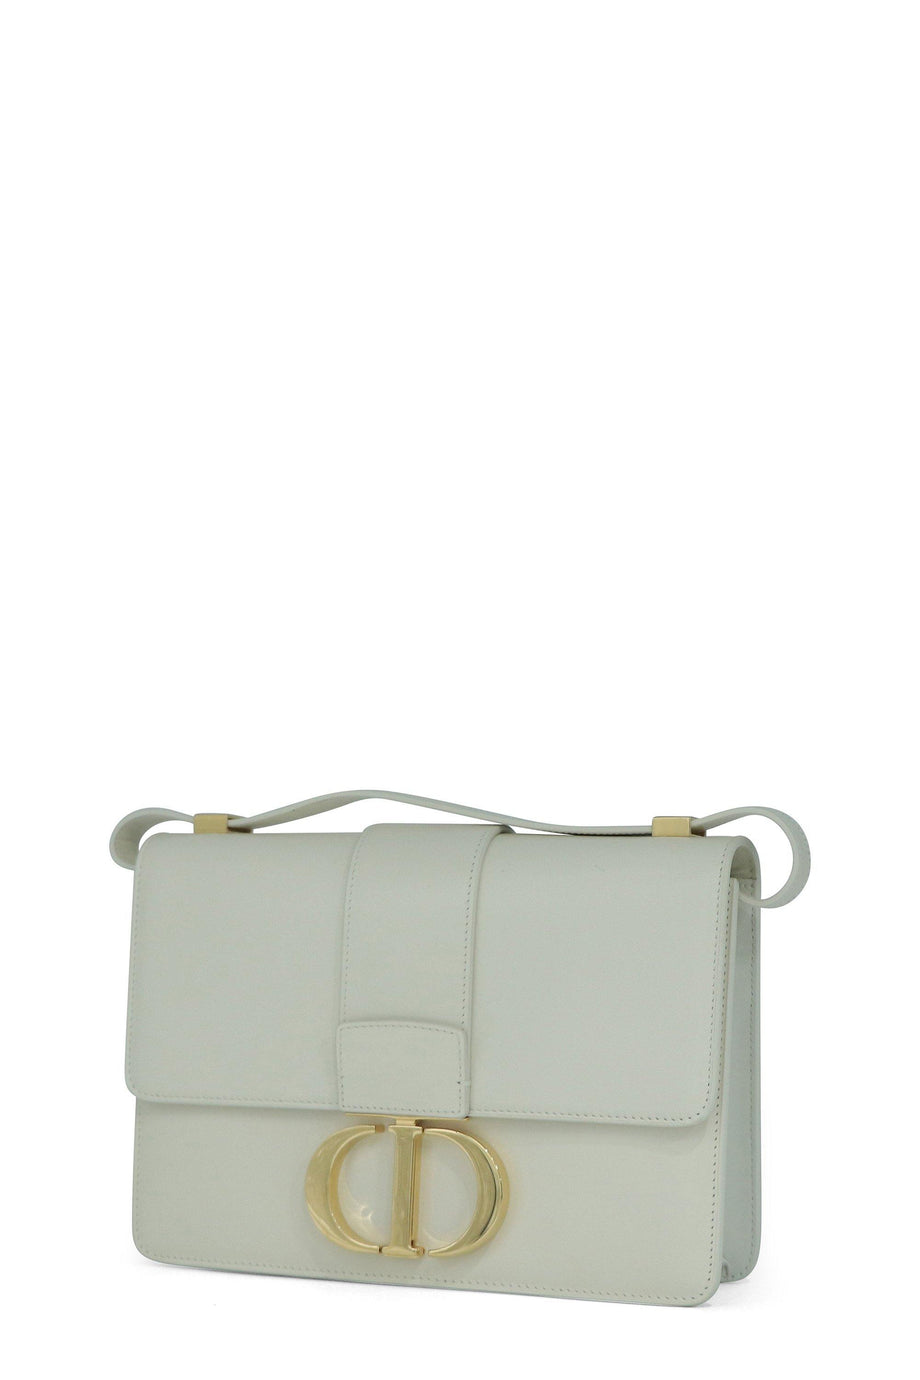 Dior Box 30 Montaigne - Designer WishBags